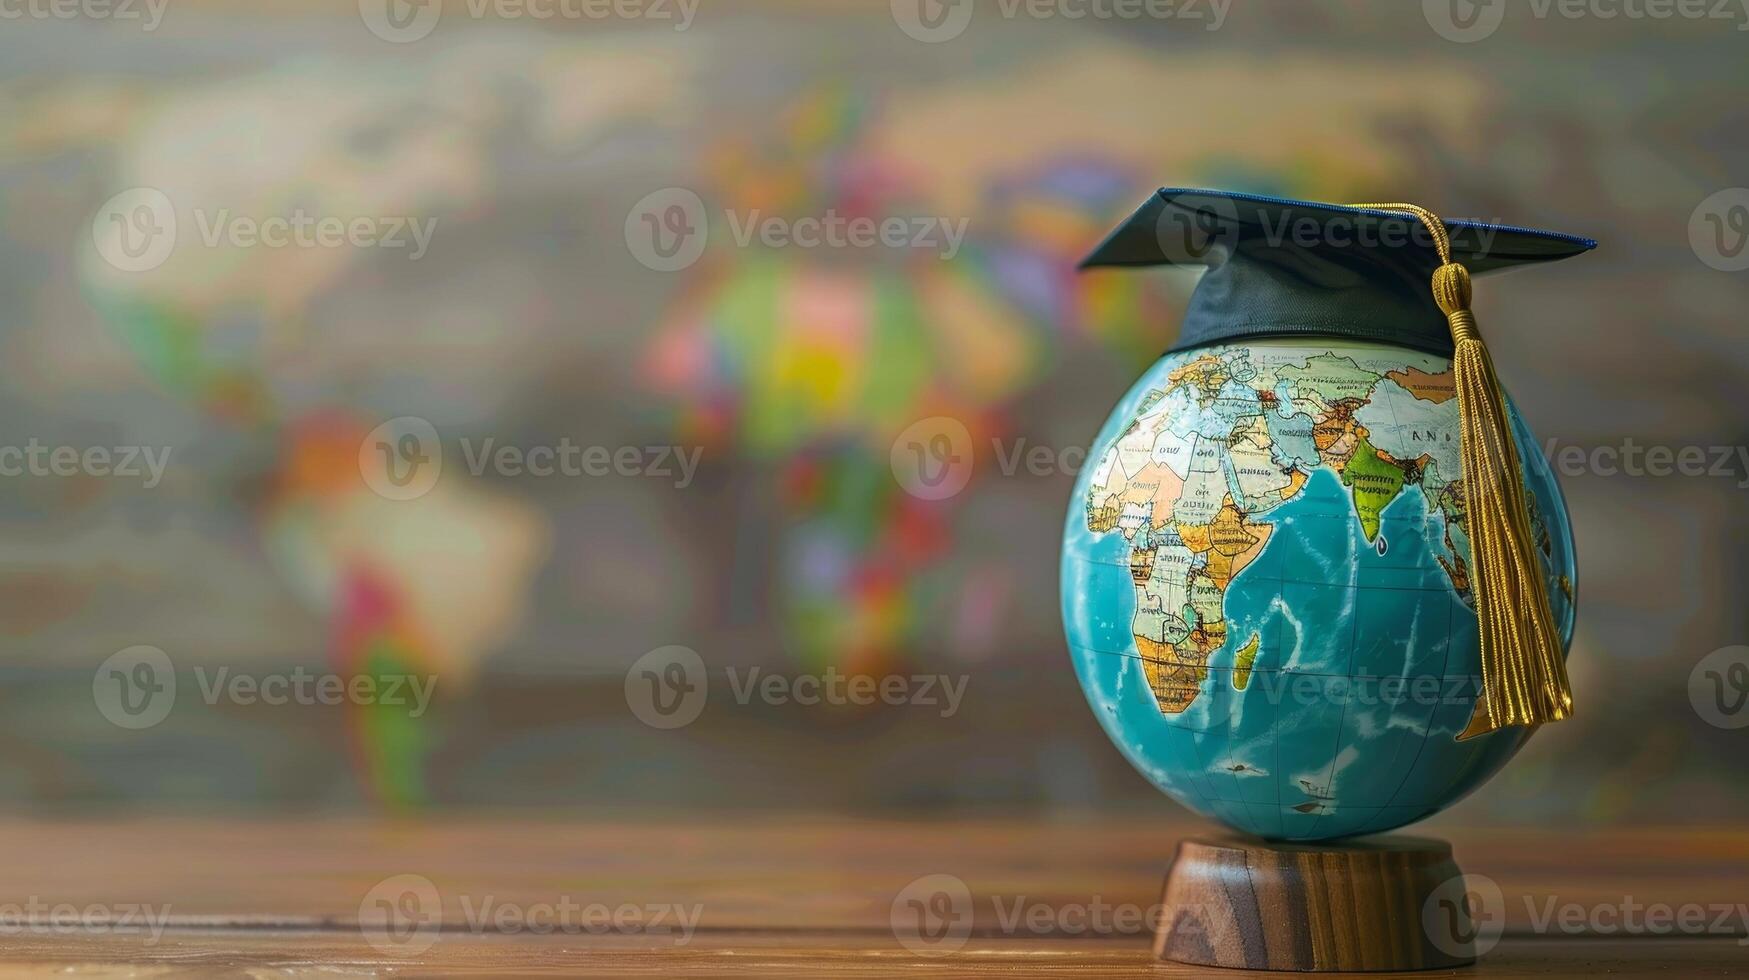 Graduation cap on top of globe with world map, symbolizing global education, international studies and academic success. photo